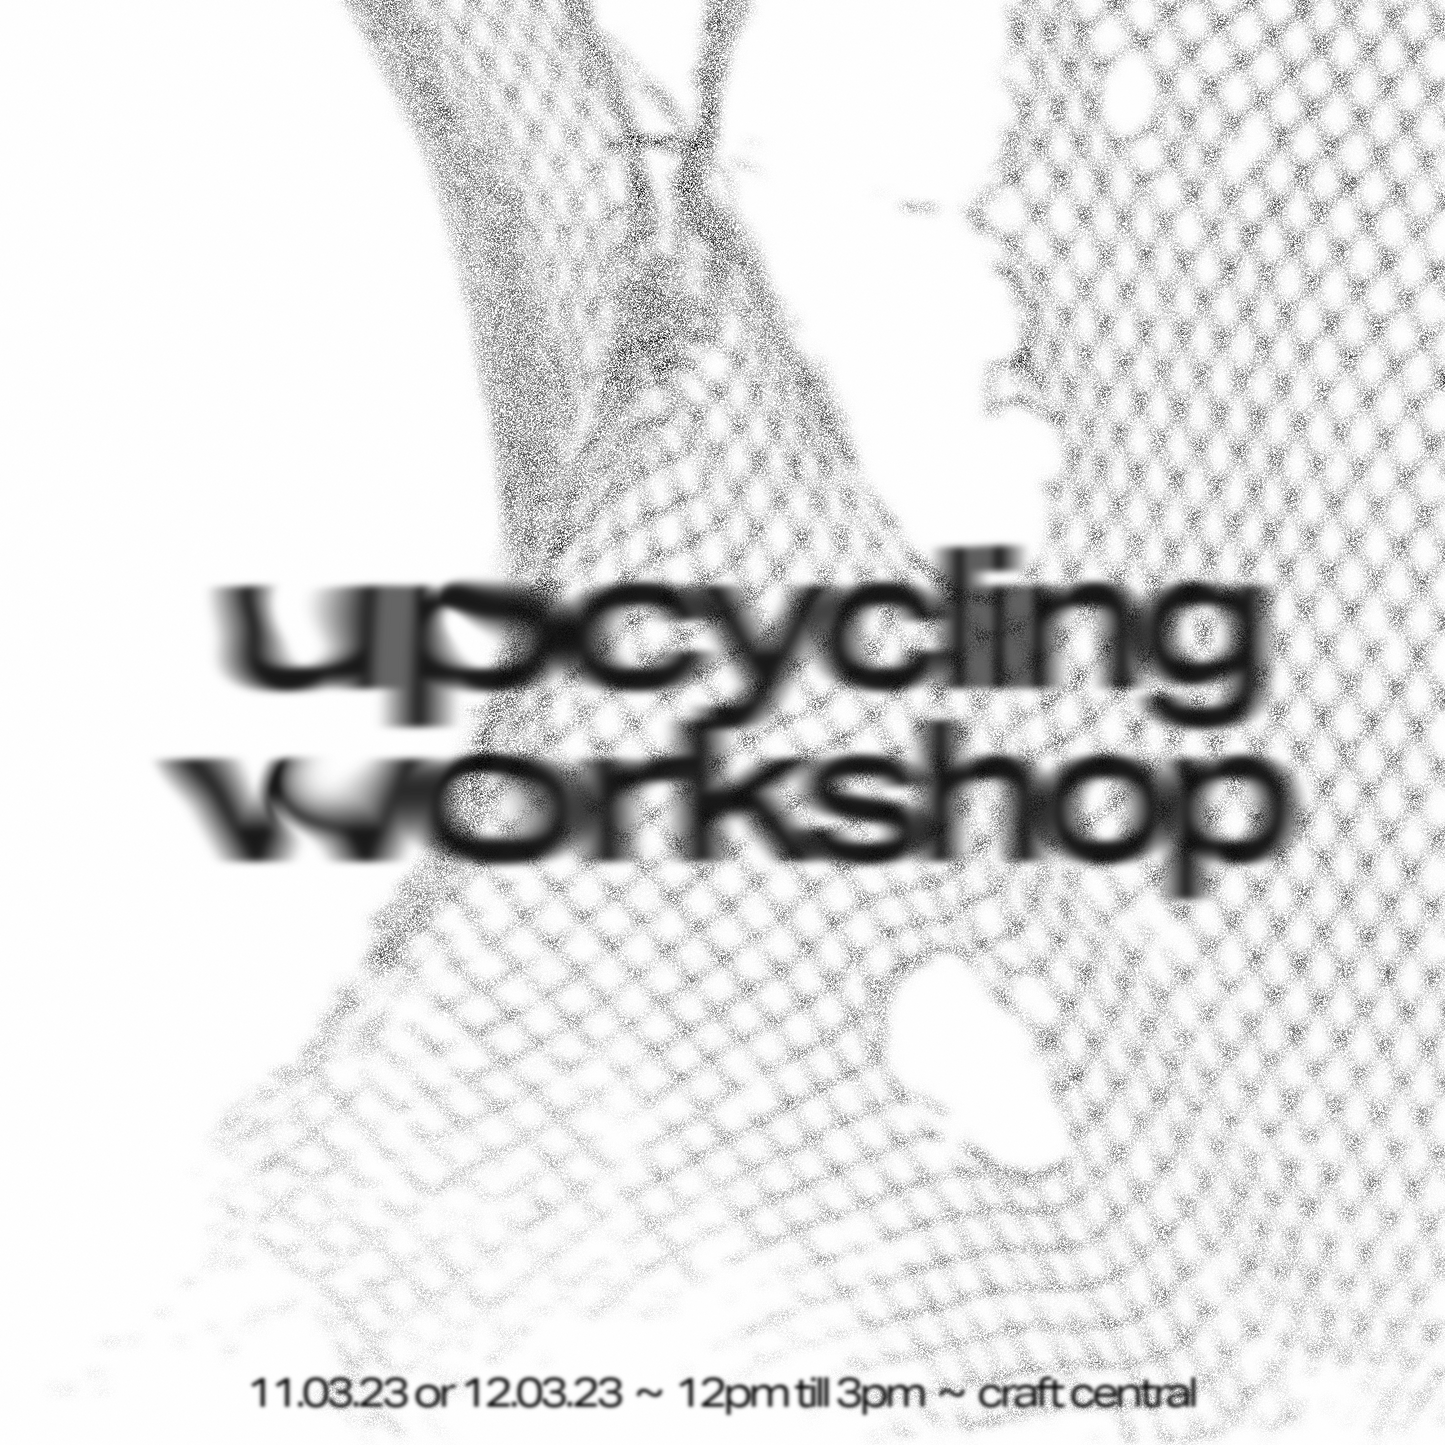 Upcycling Workshop - Tote Bag + Drawstring Bag